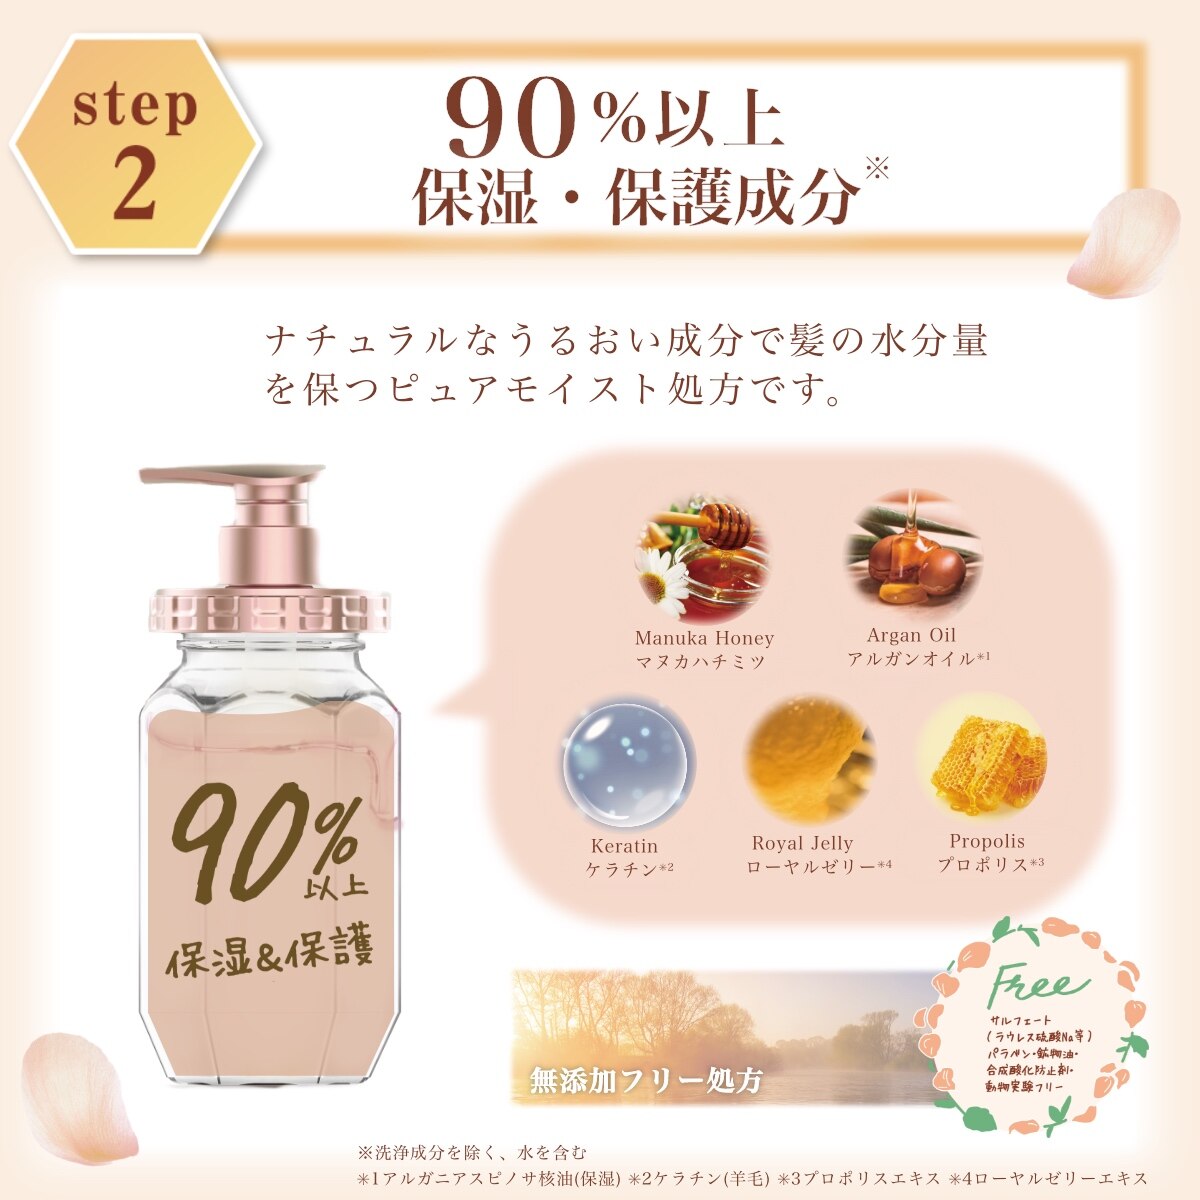 honey Melty Moist Repair Hair Oil Step 3.0 100ml – Momoko Cosmetics